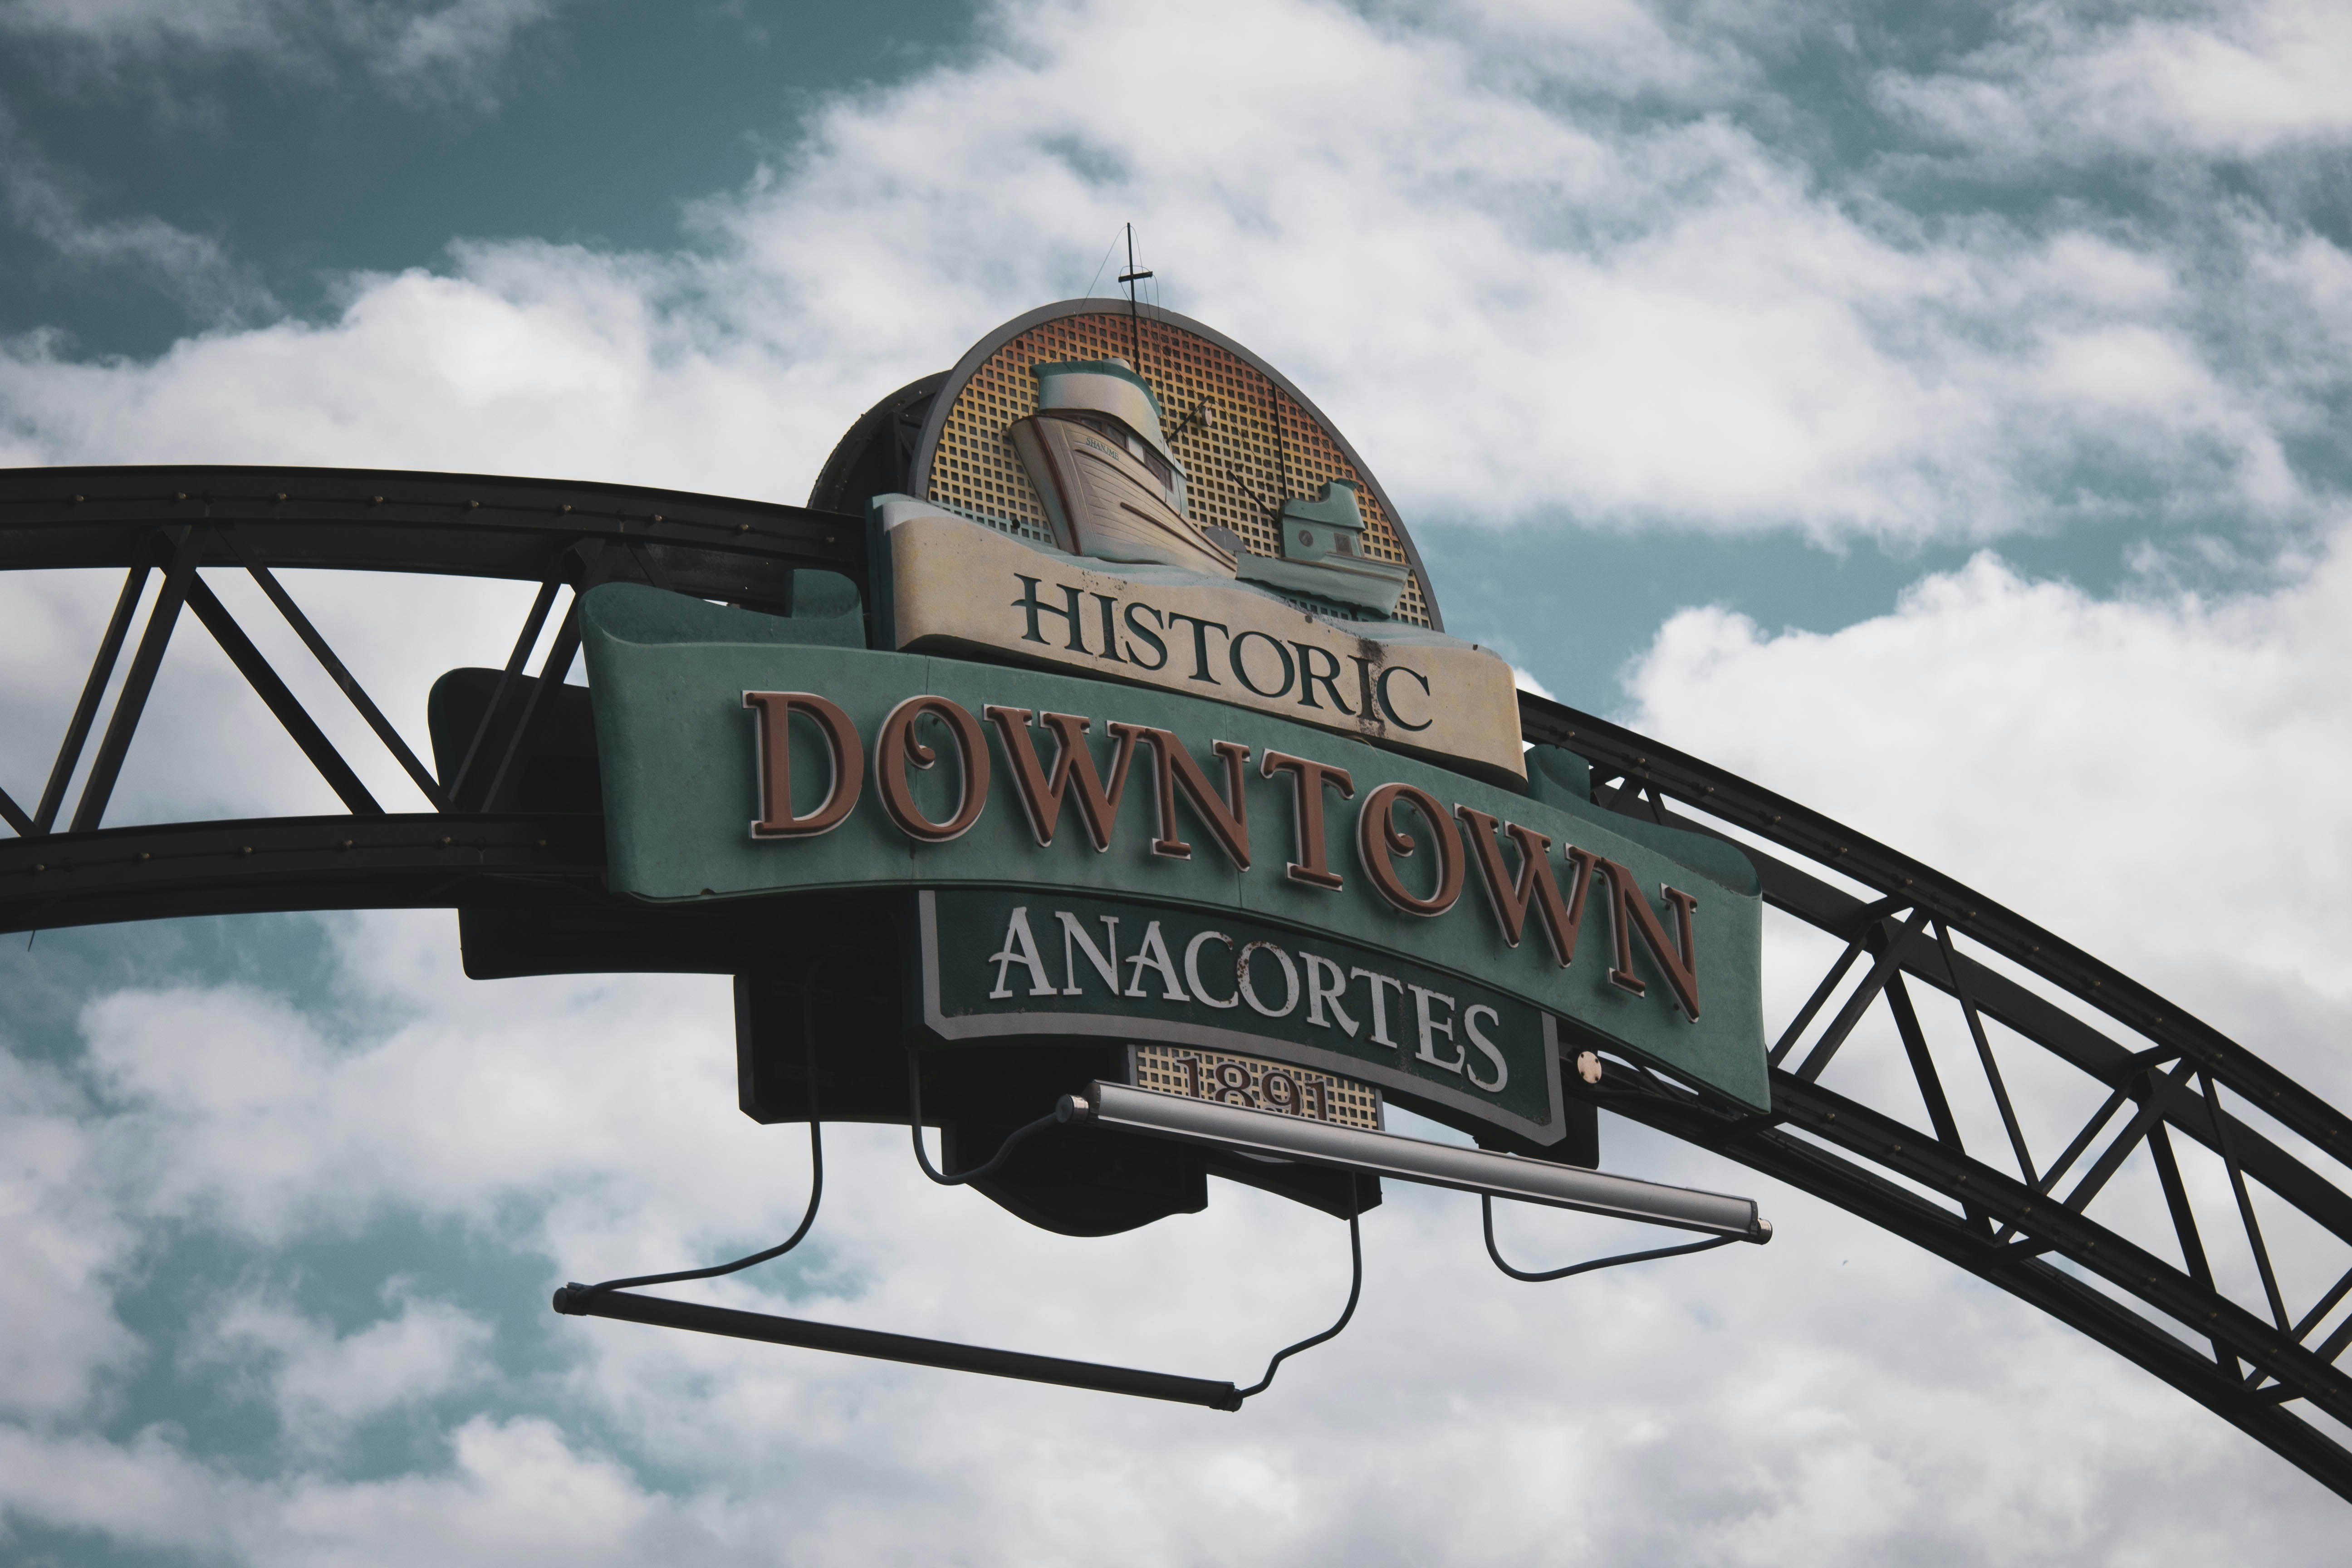 Historic Downtown Anacortes signage